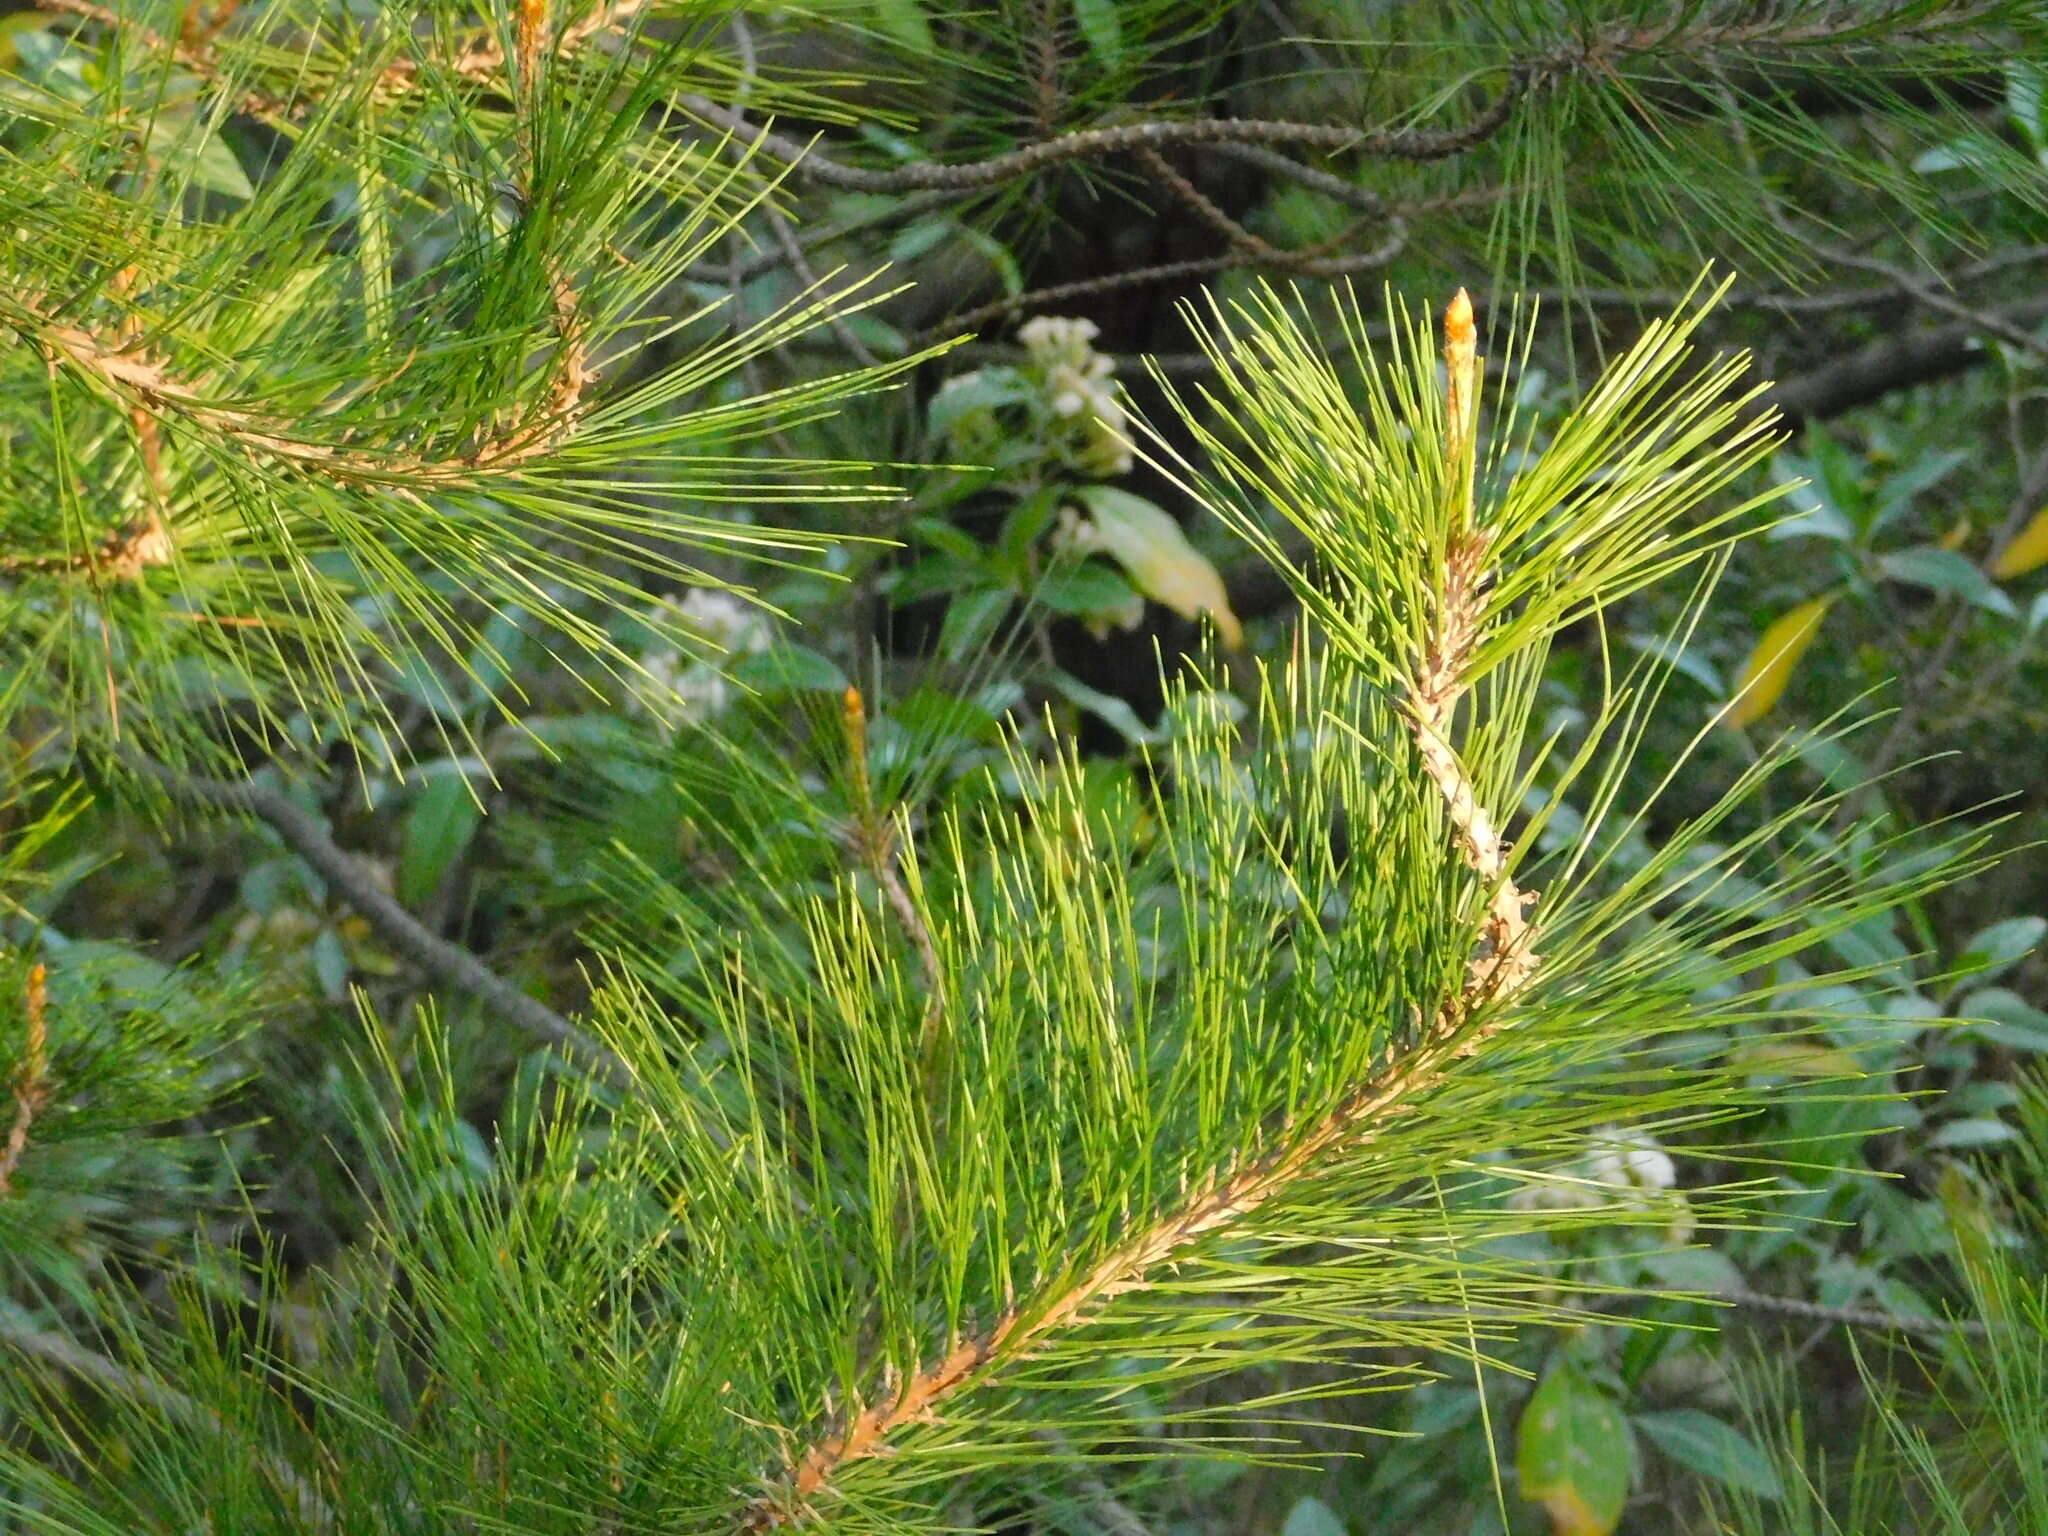 Image of Gregg's pine